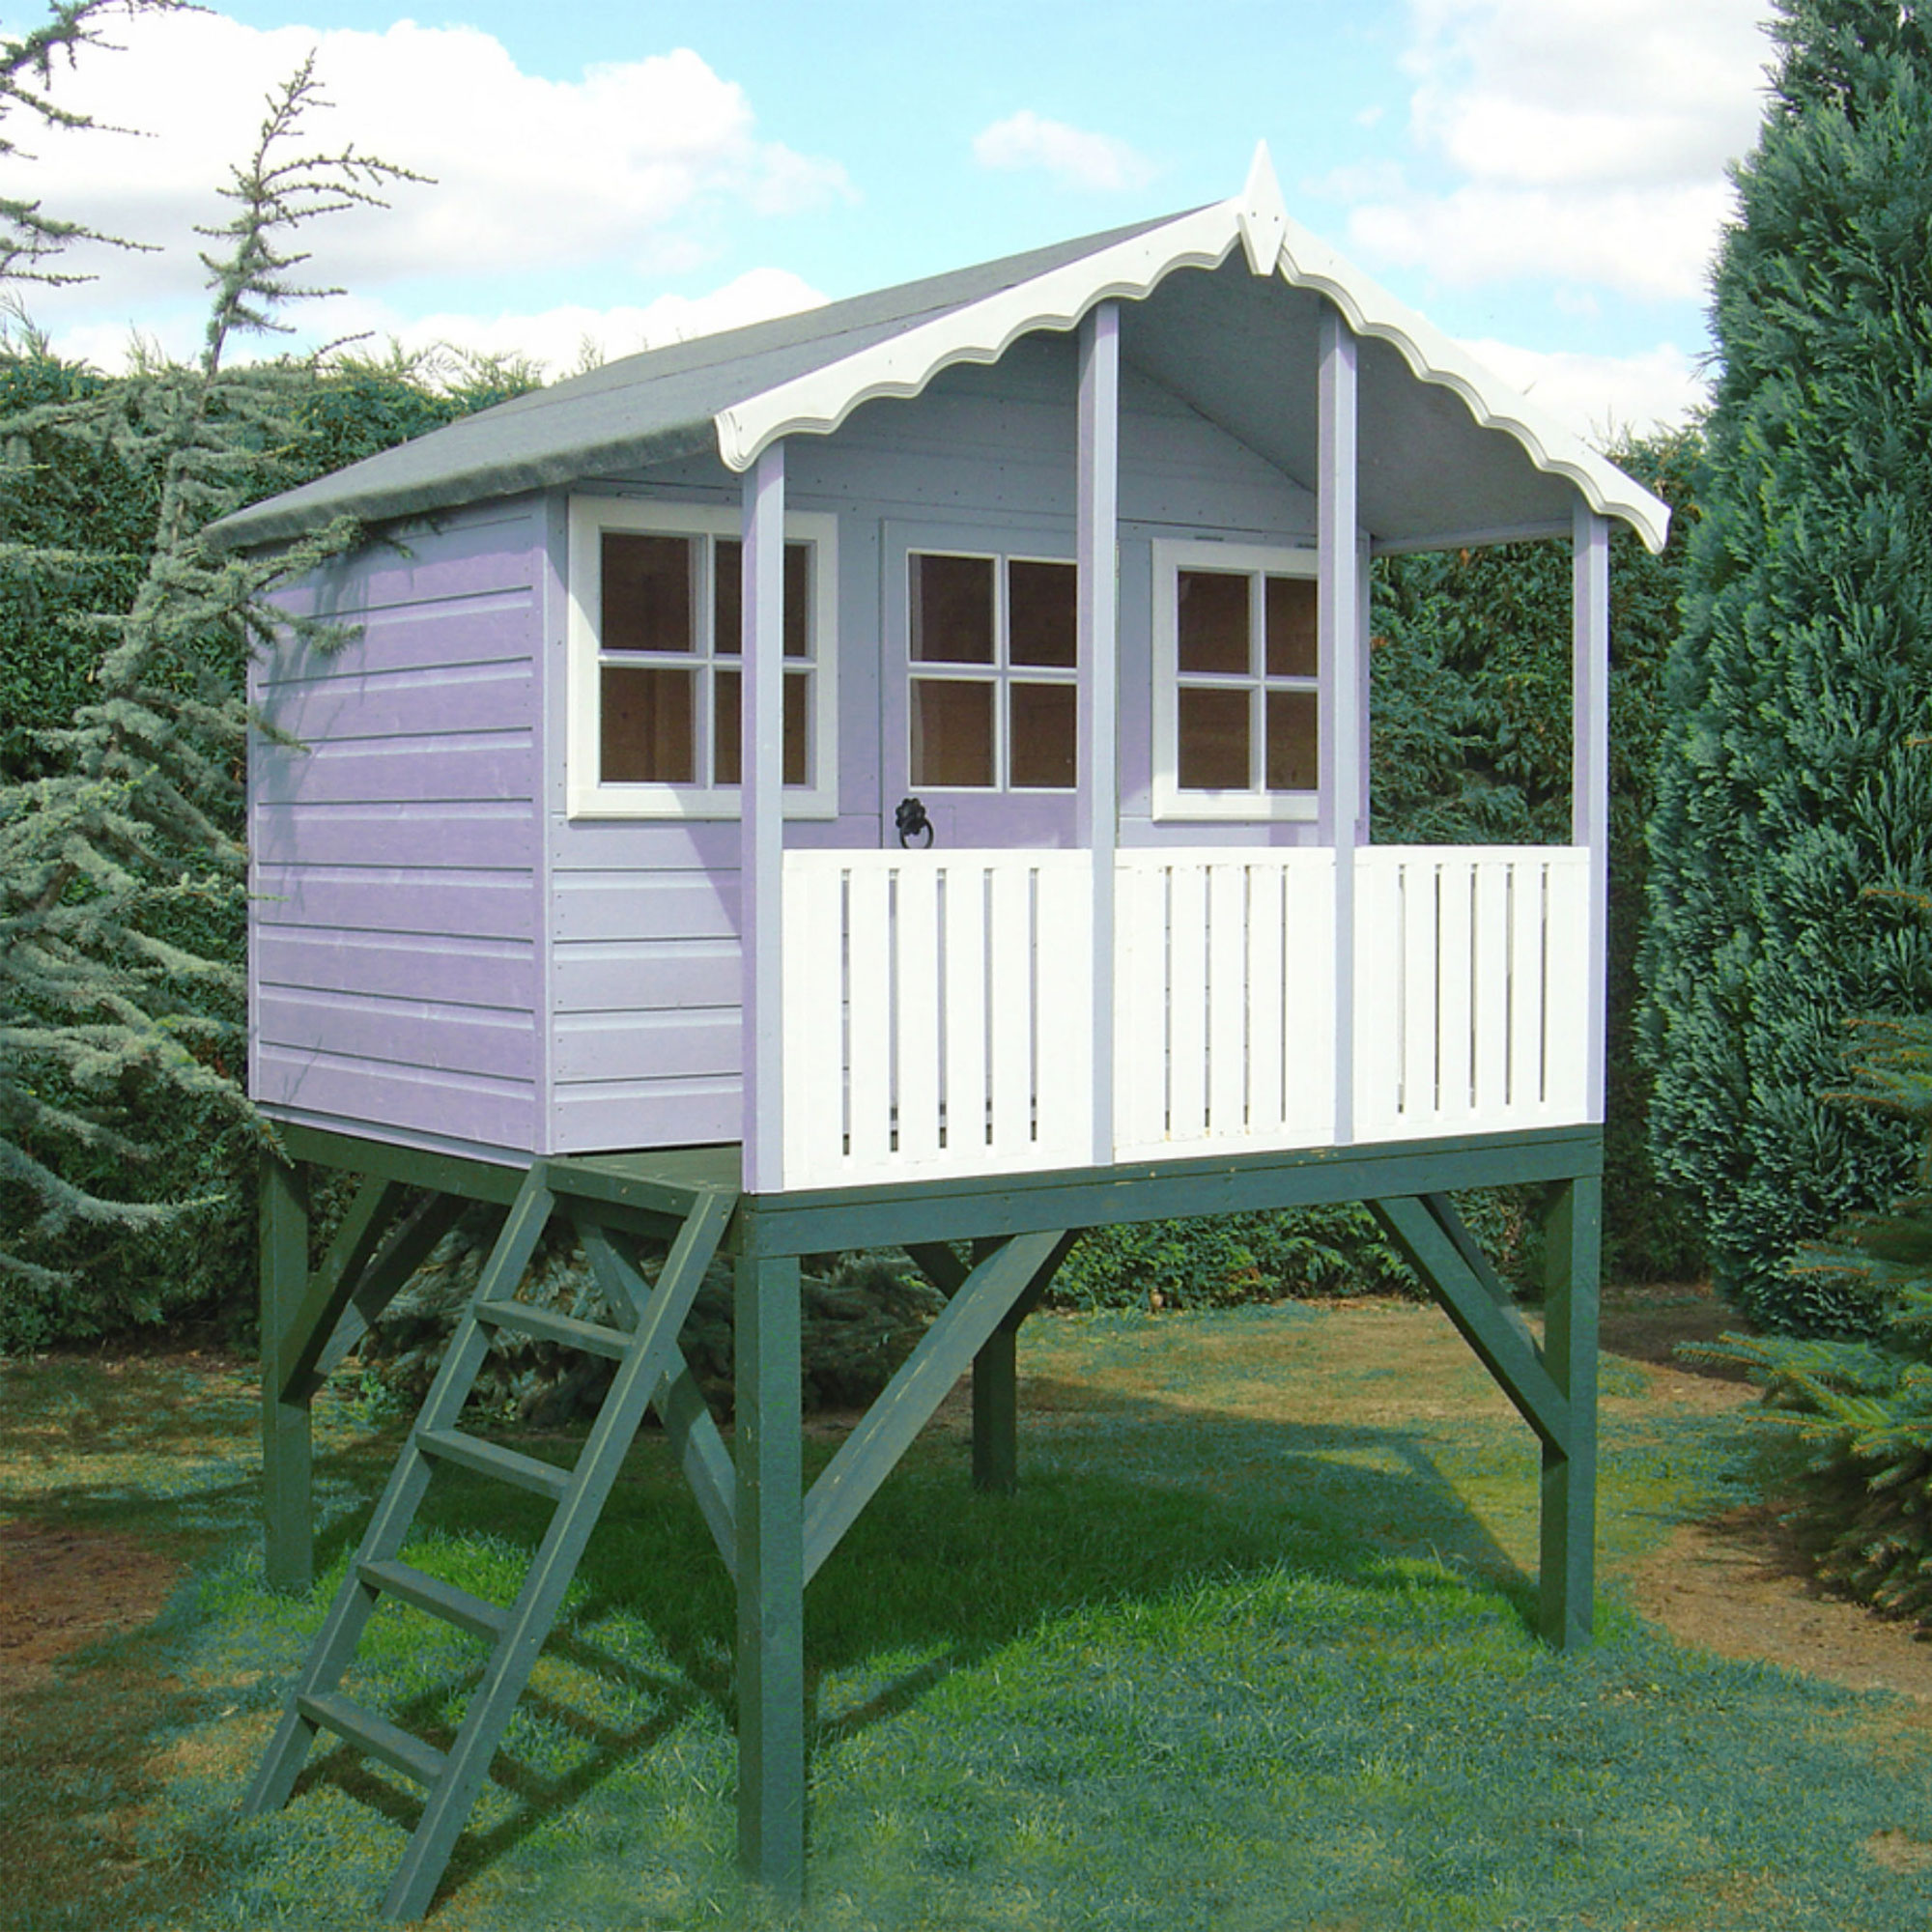 6x6 wooden playhouse